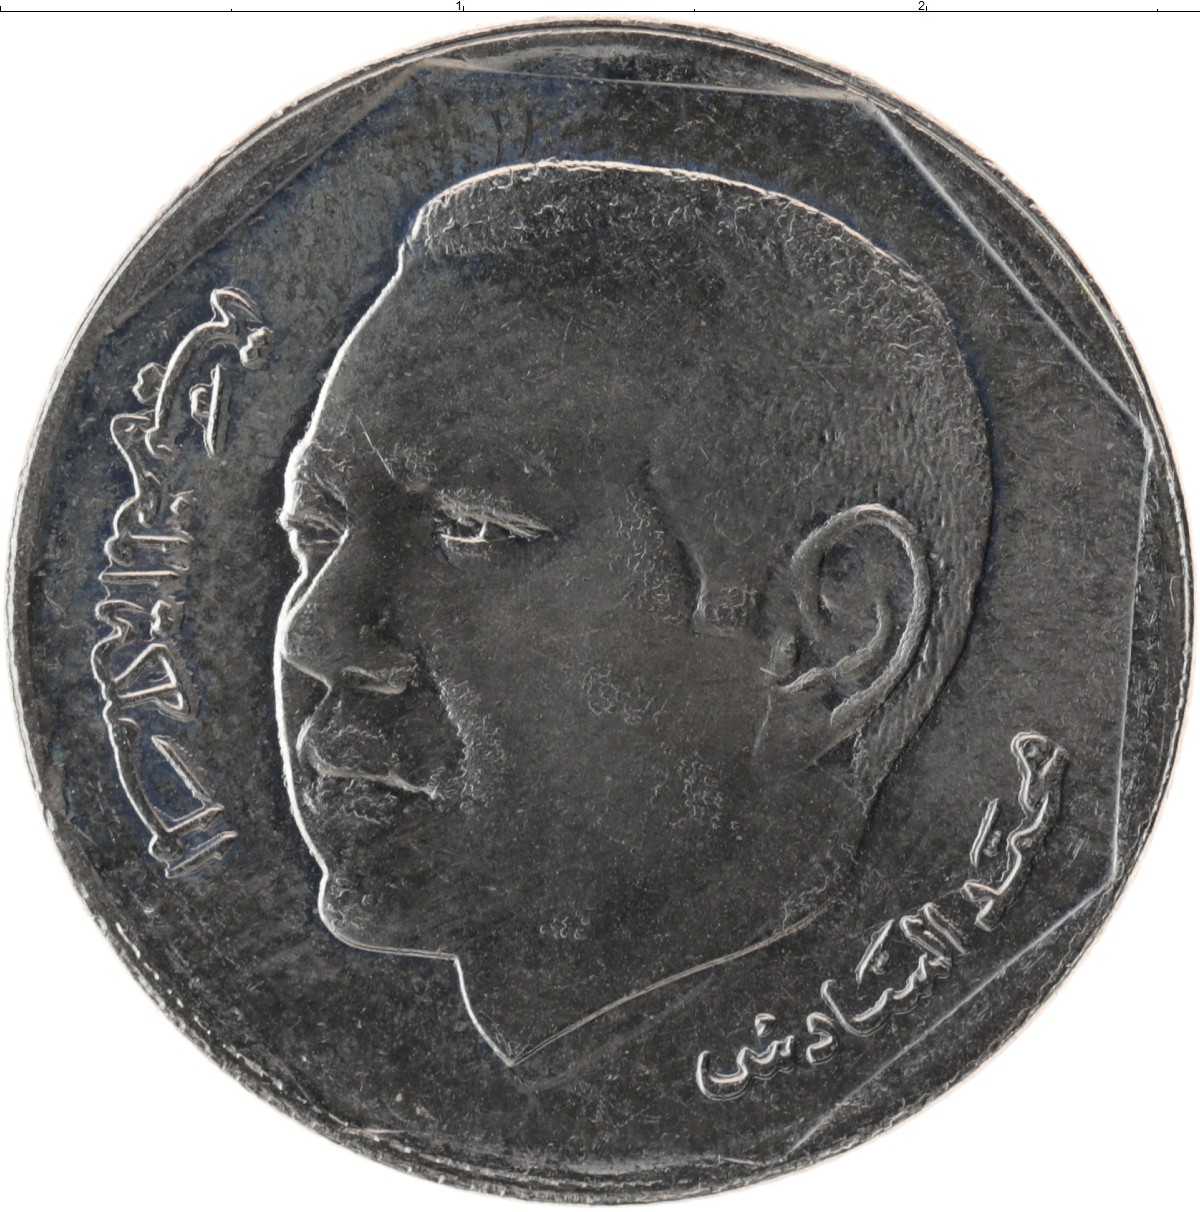 2 дирхама. Монета дирхама 2002-1423. Марокканские монеты 1423-2002. Монета арабская 1423-2002 голова. Монета Марокко 2002.